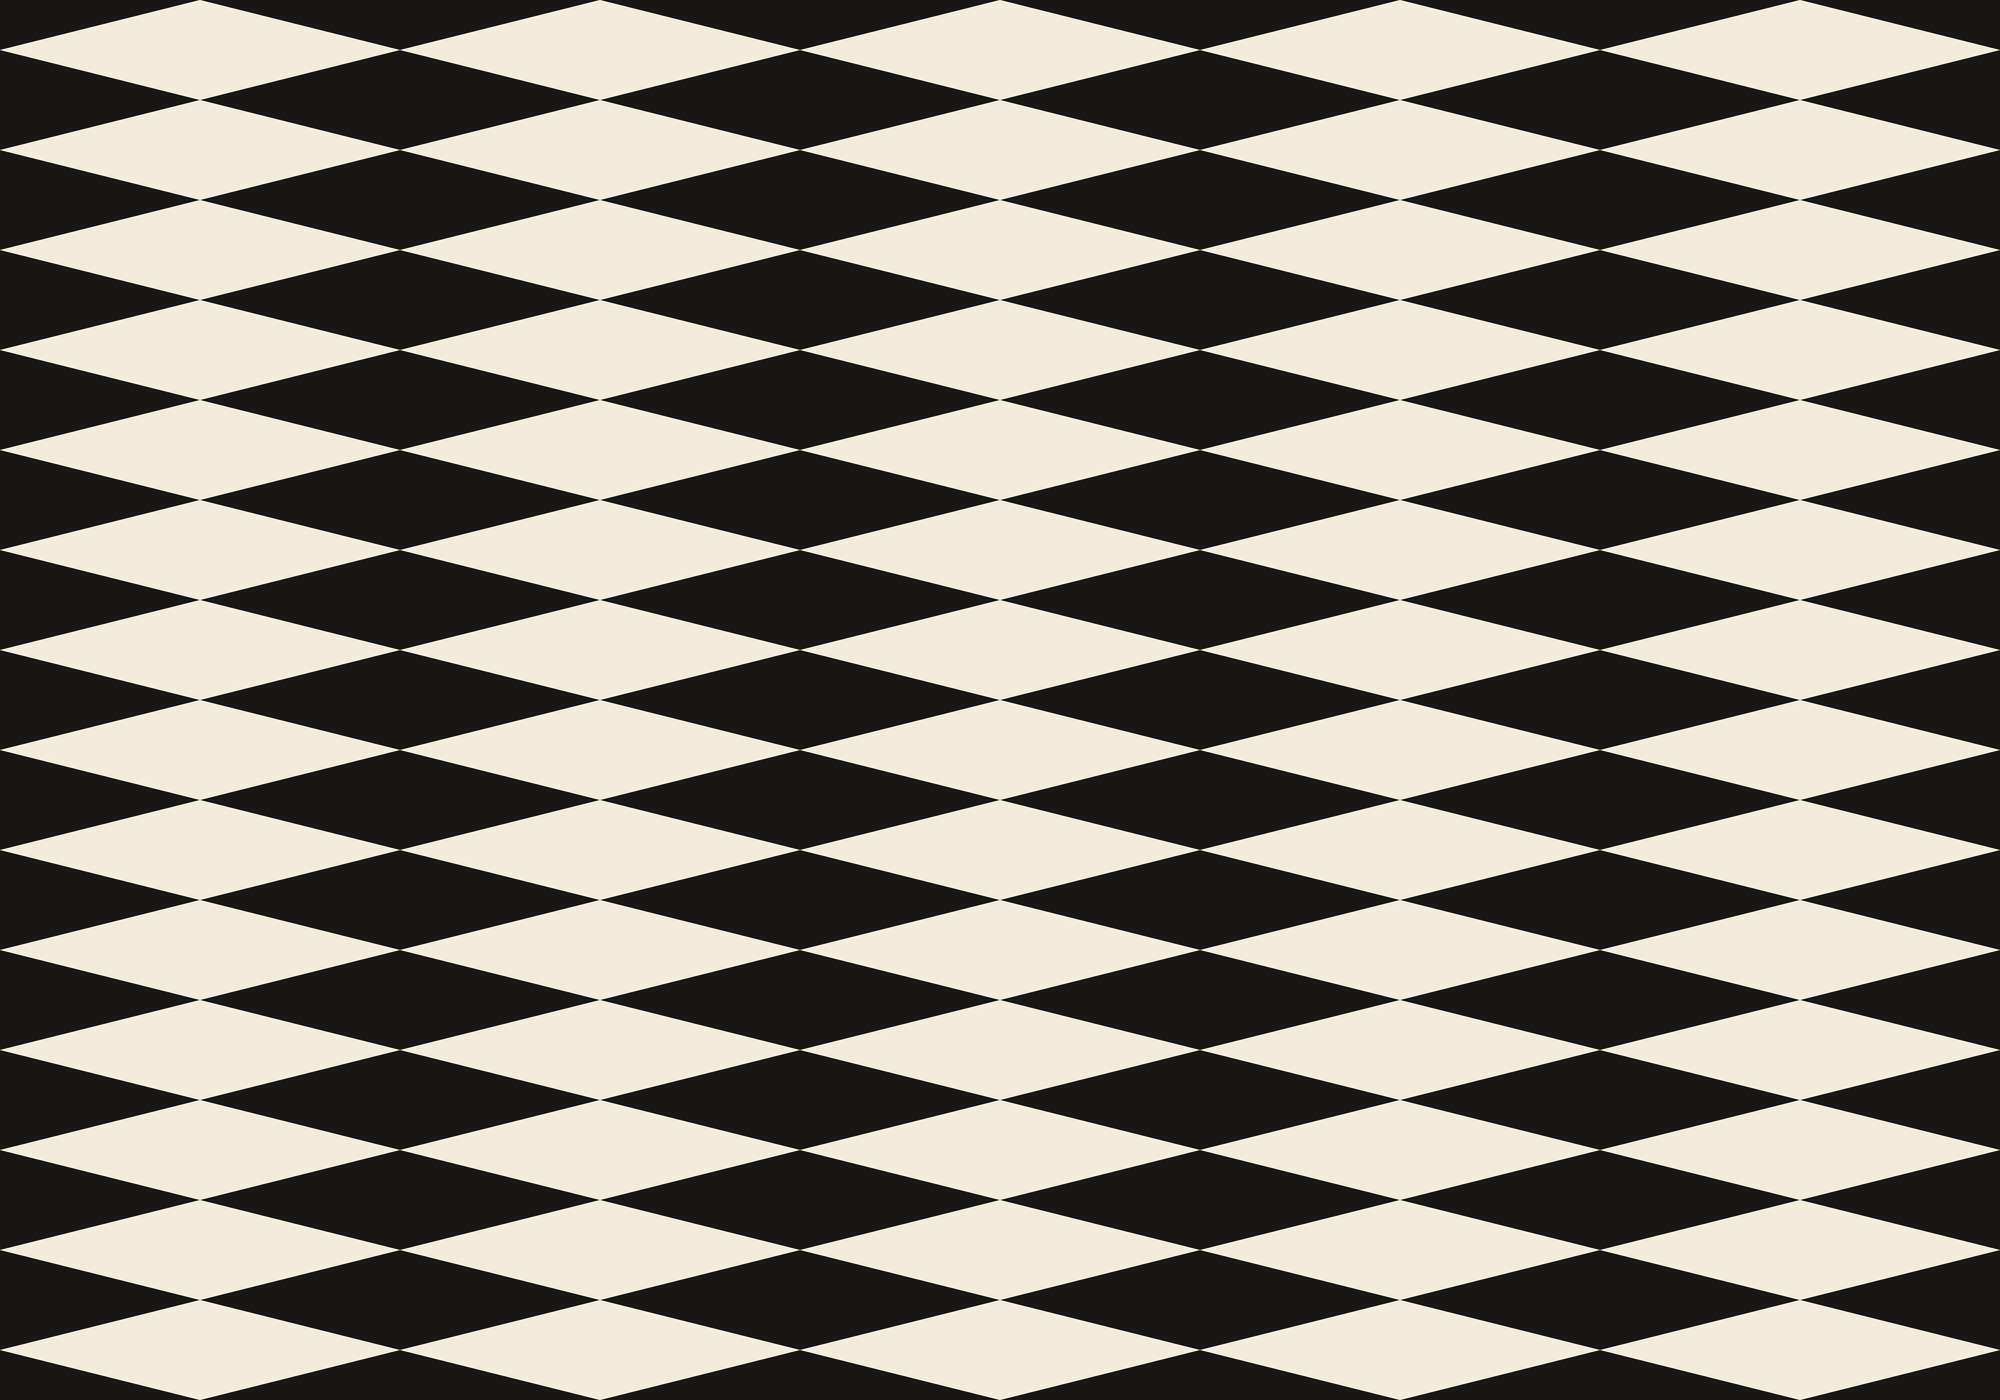             Graphic wallpaper with diamonds in 70s look - black, cream | structure non-woven
        